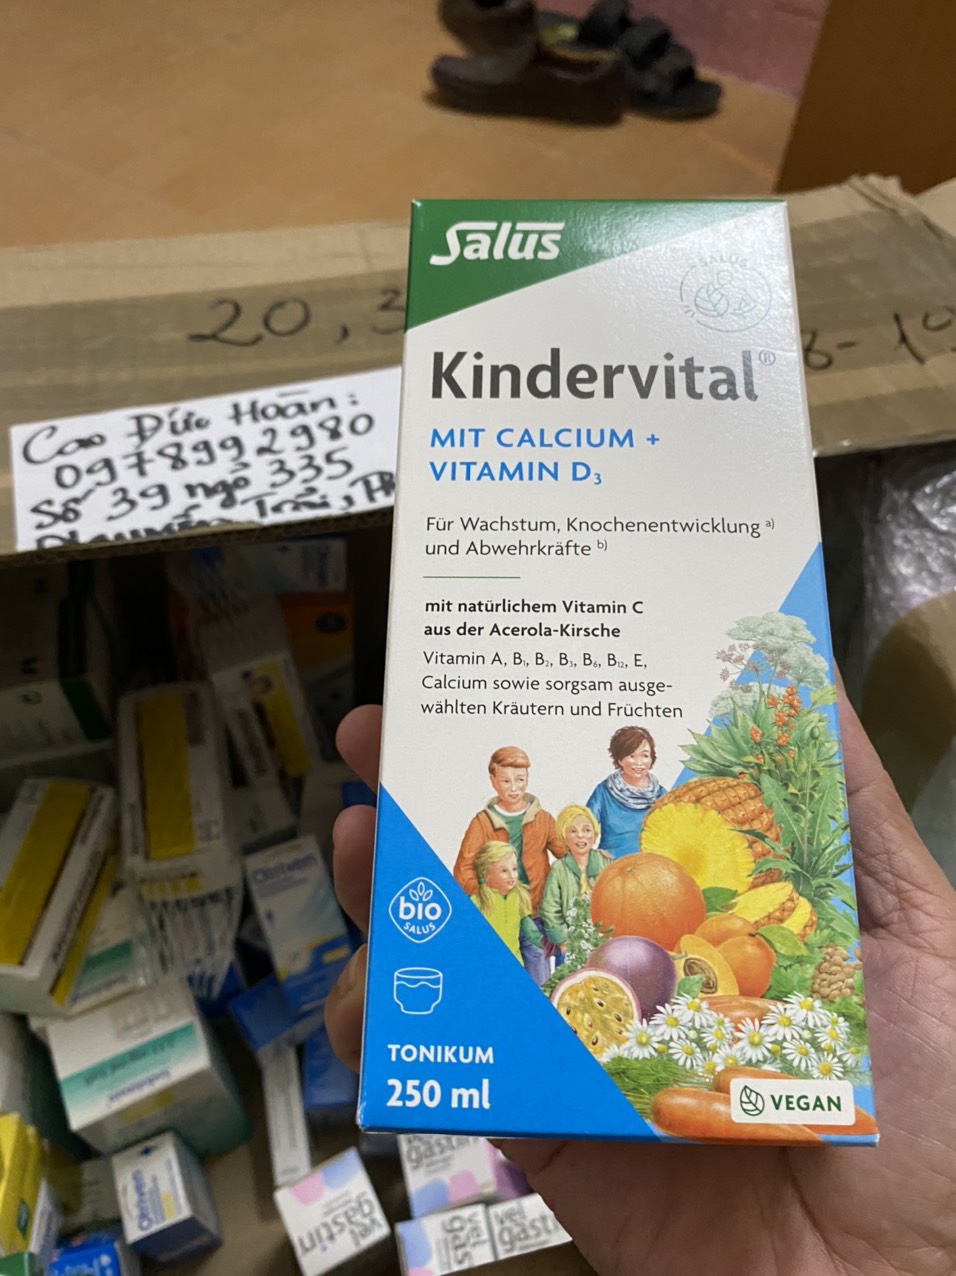 Kindervital mit calcium + vitamin D3